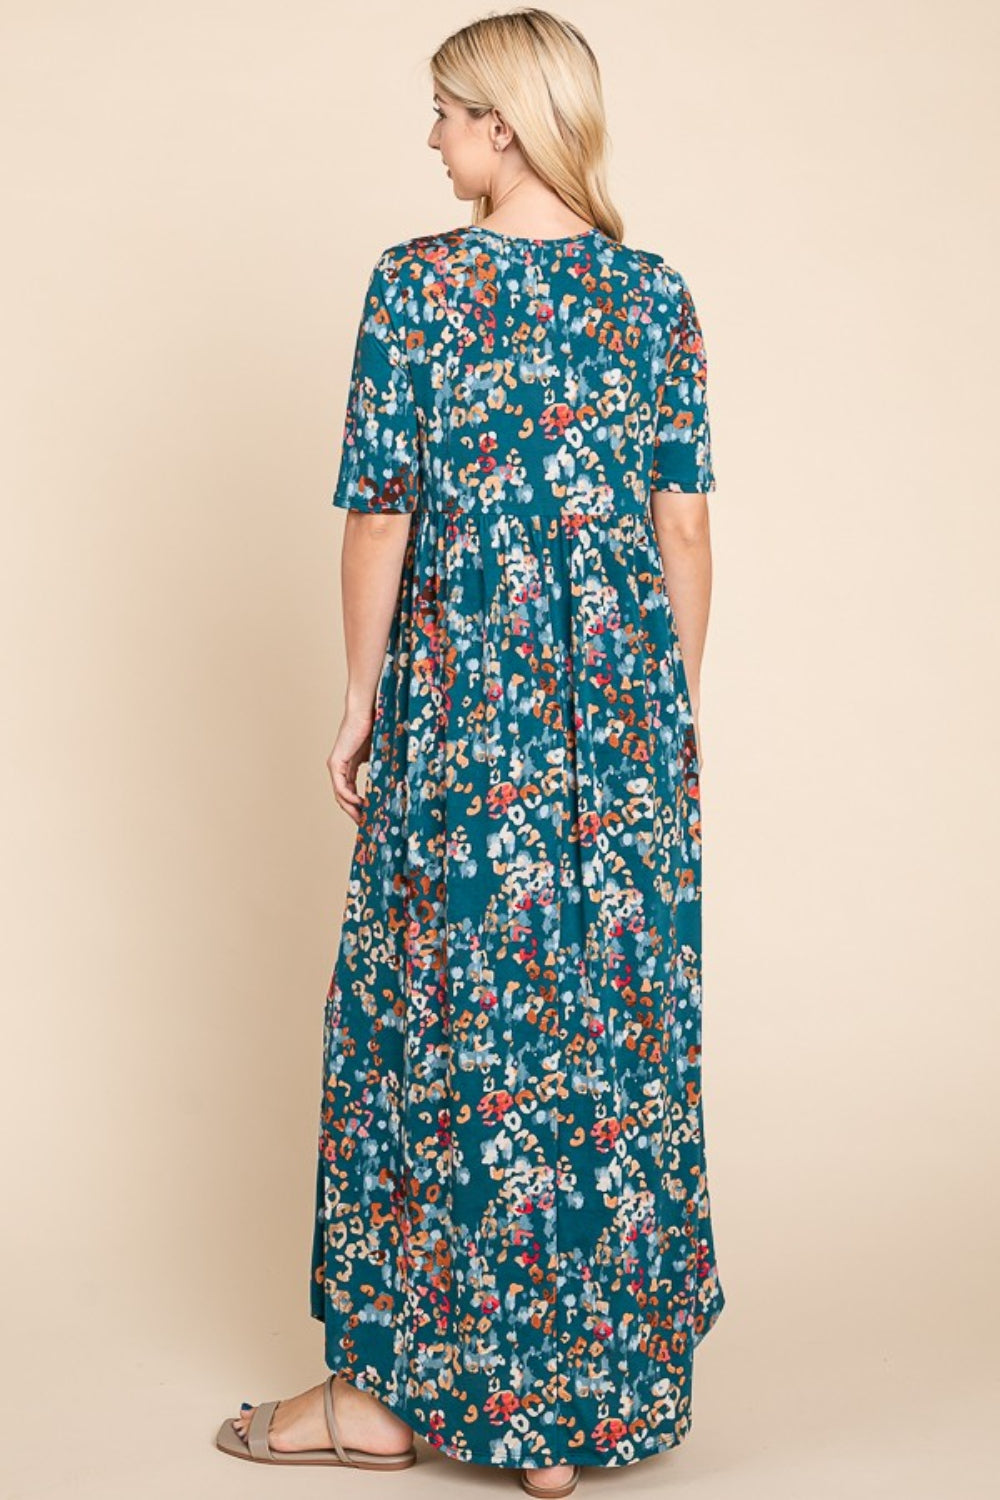 Stylish BOMBOM Printed Maxi Dress - Elegant Shirred Long Dress, Perfect for Evening Events & Summer Fashion